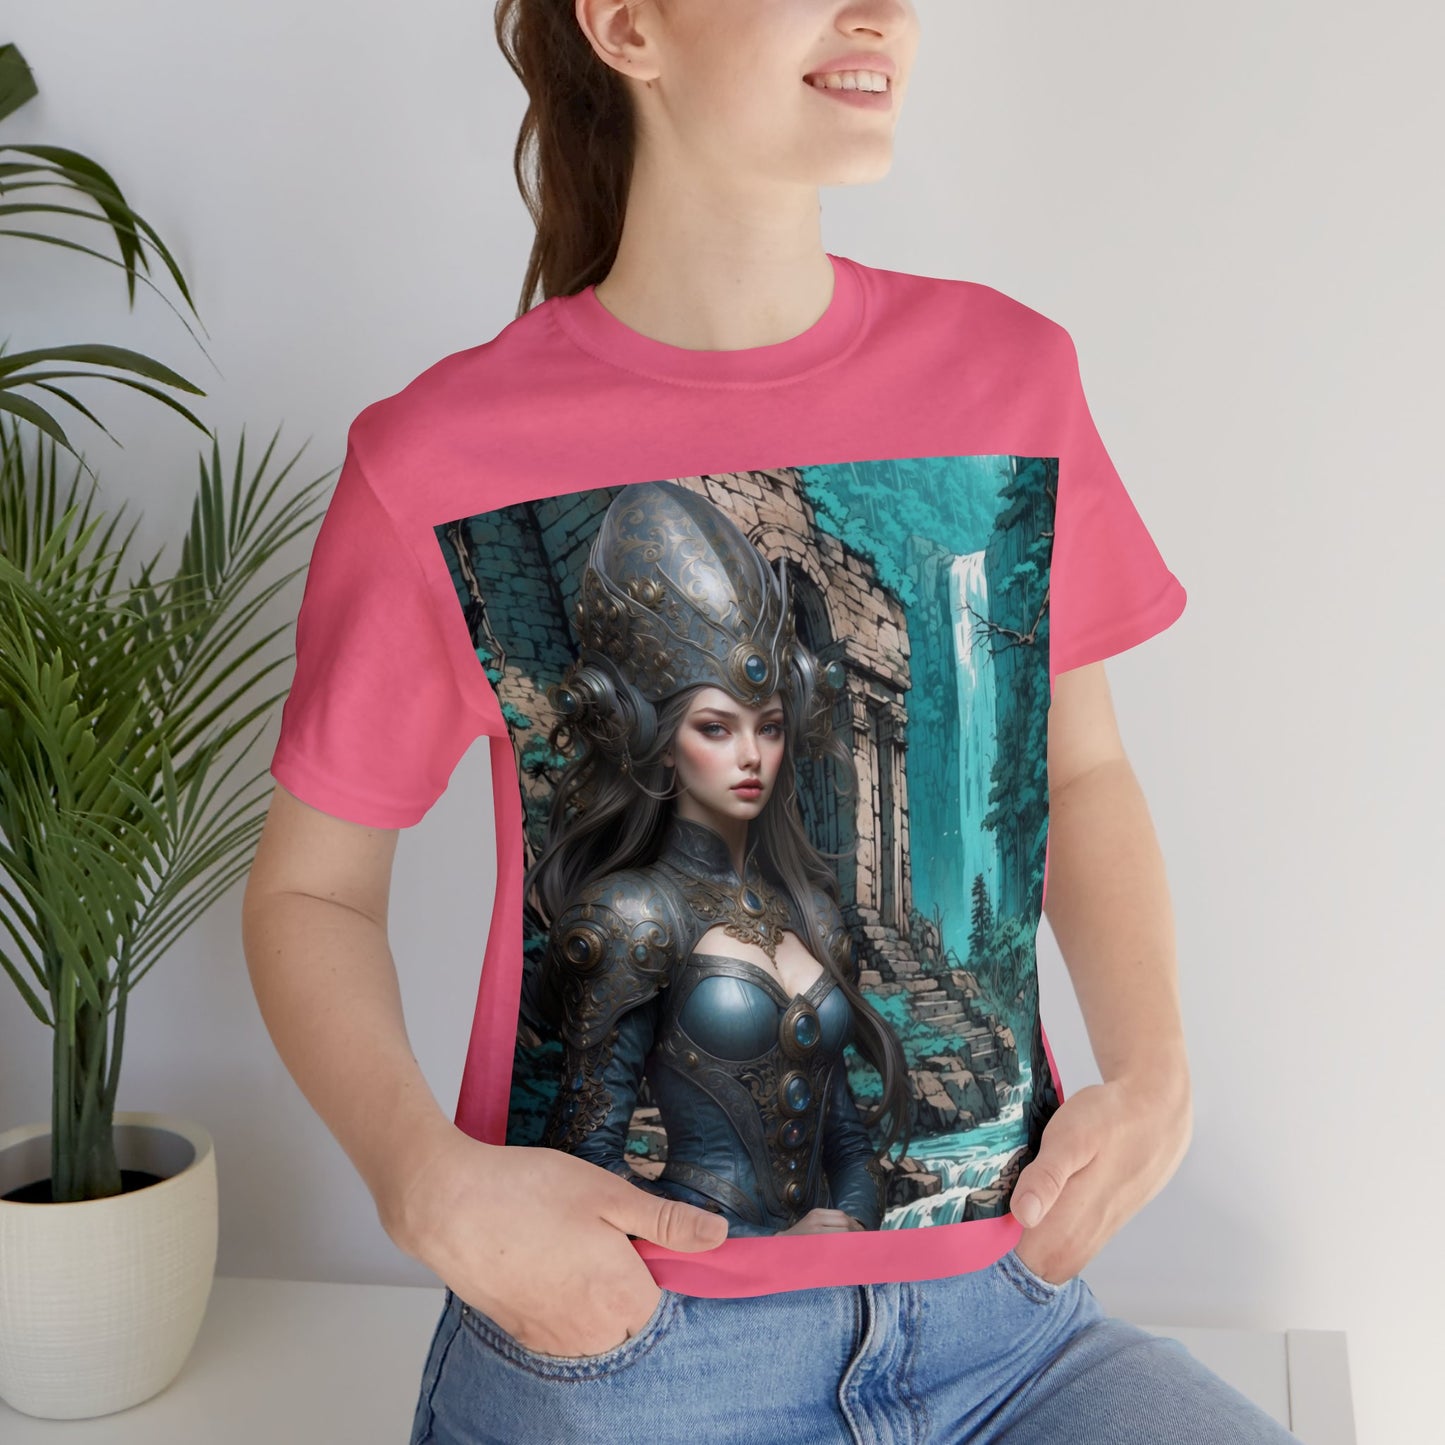 Warrior Princess | HD Graphic | Fantasy | Anime | Unisex | Men's | Women's | Tee | T-Shirt